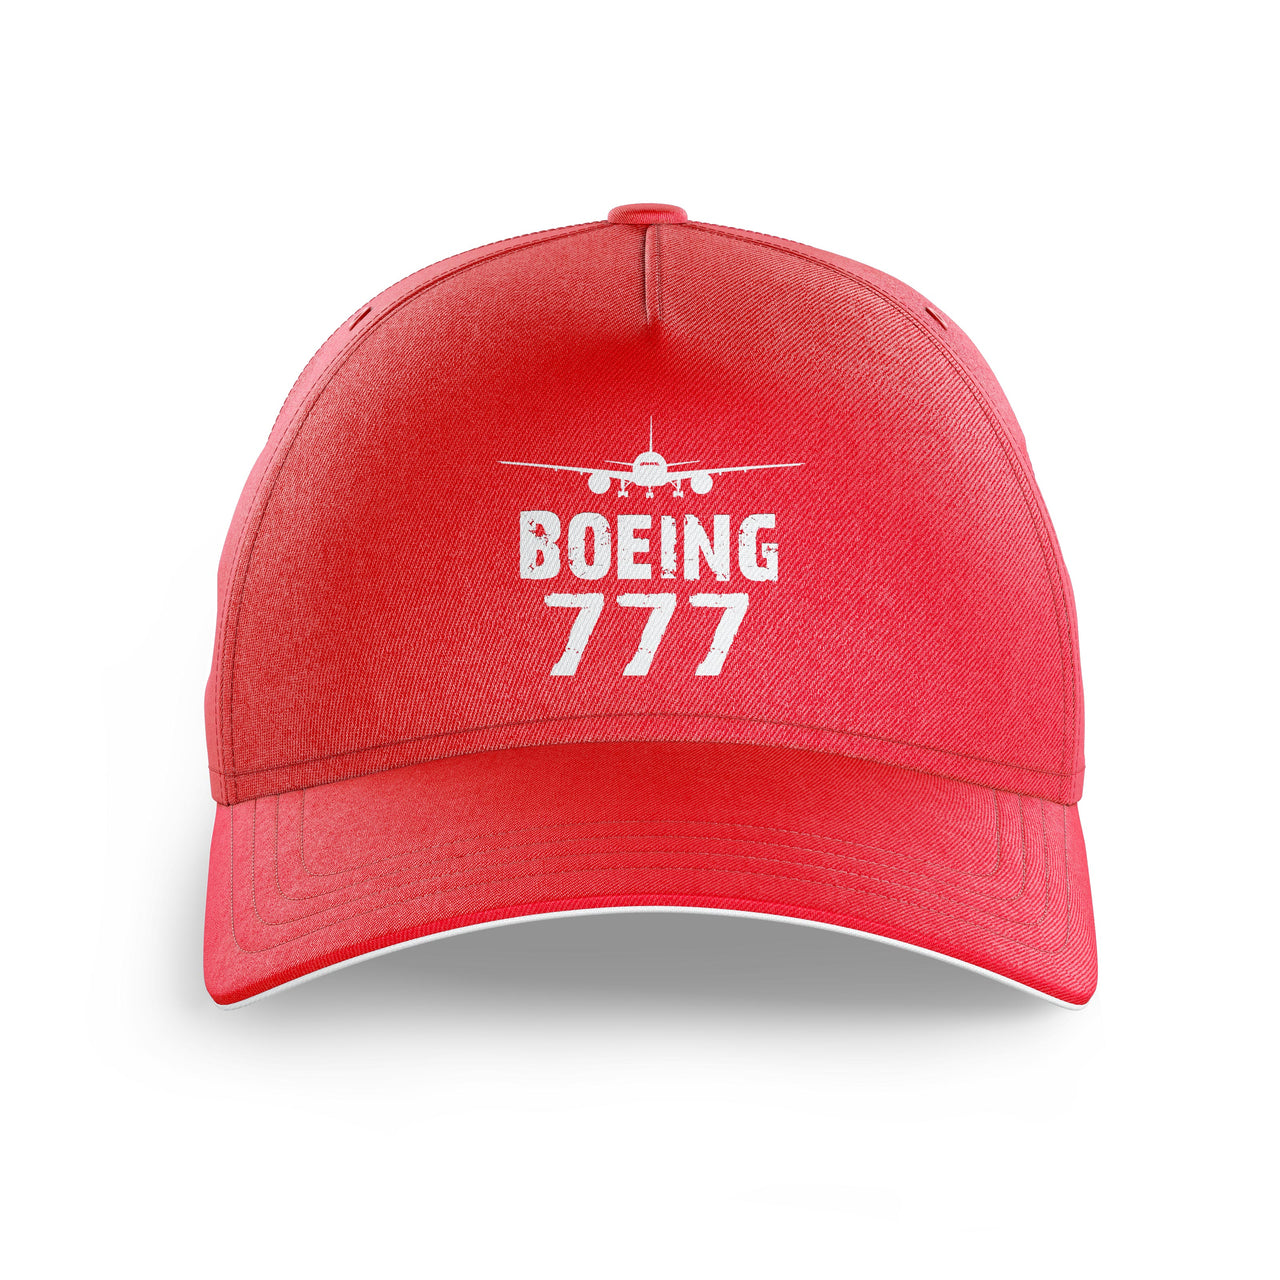 Boeing 777 & Plane Printed Hats